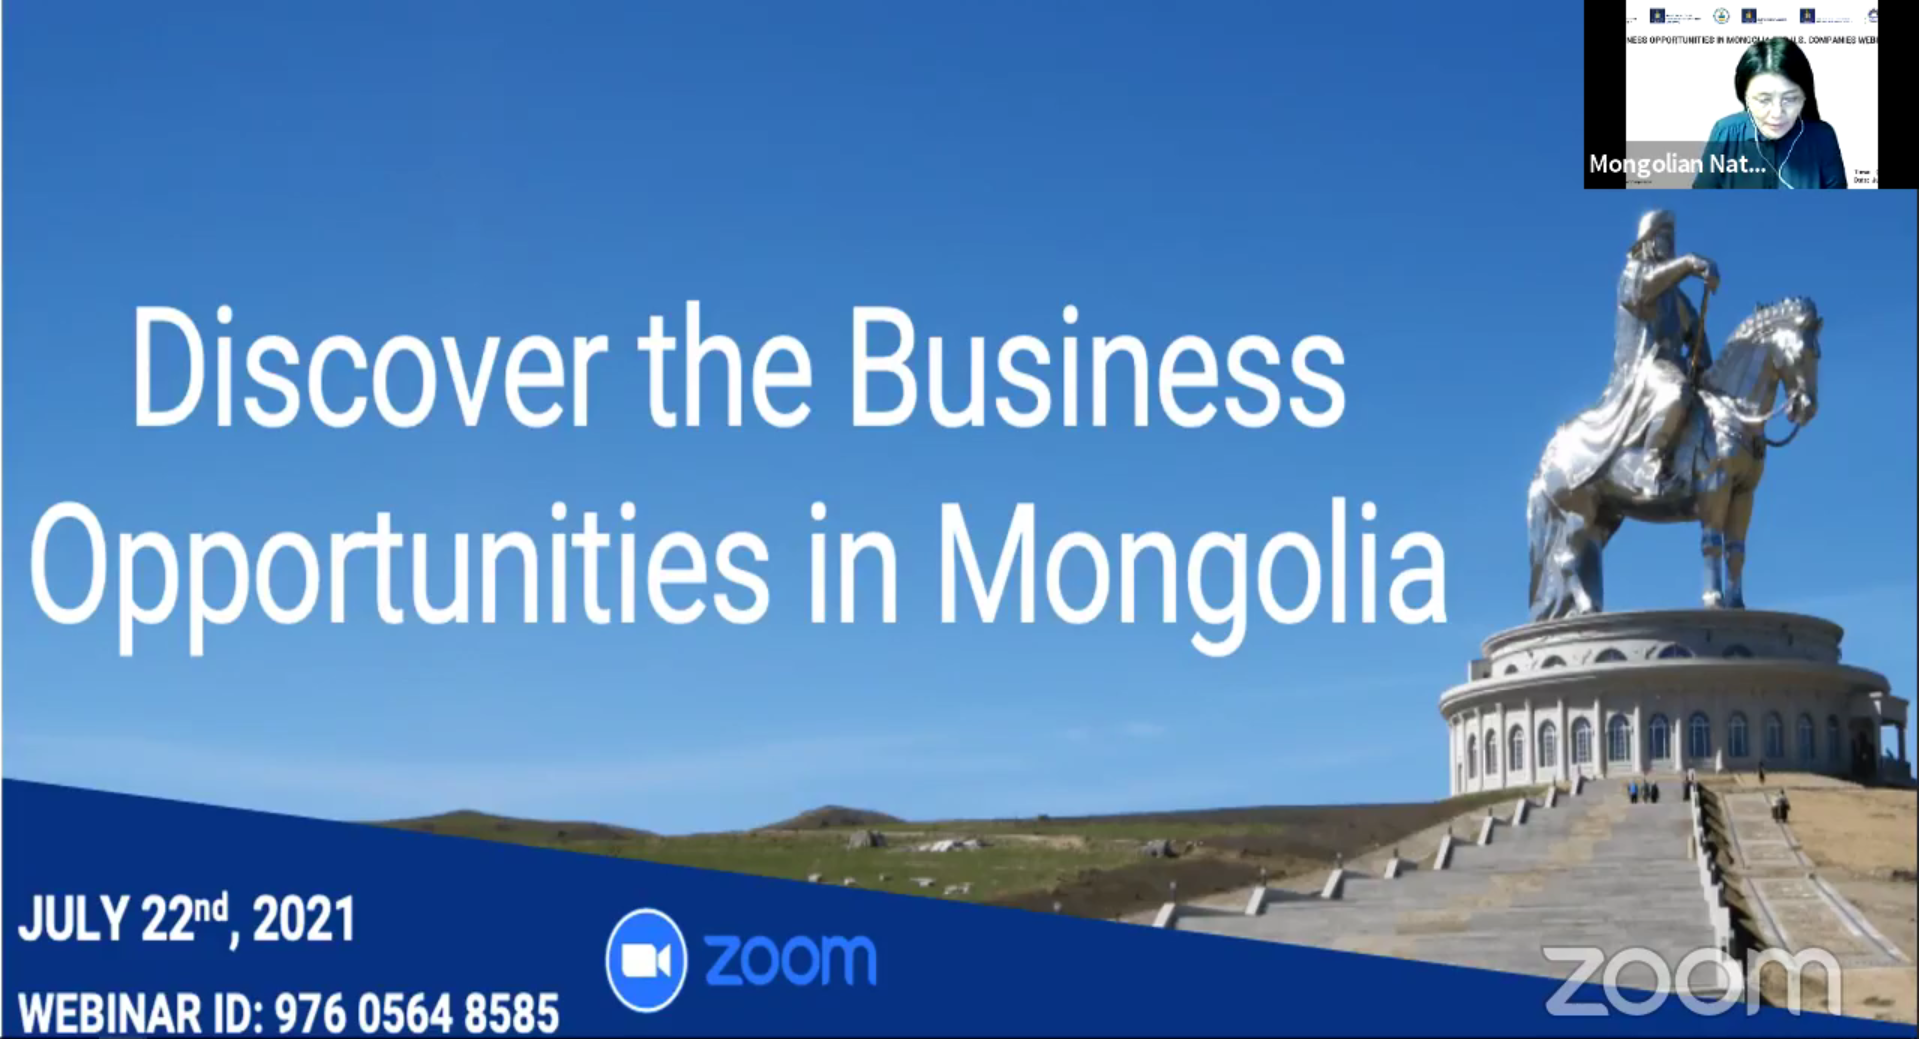 Business Opportunities in Mongolia for U.S. Companies Online Webinar